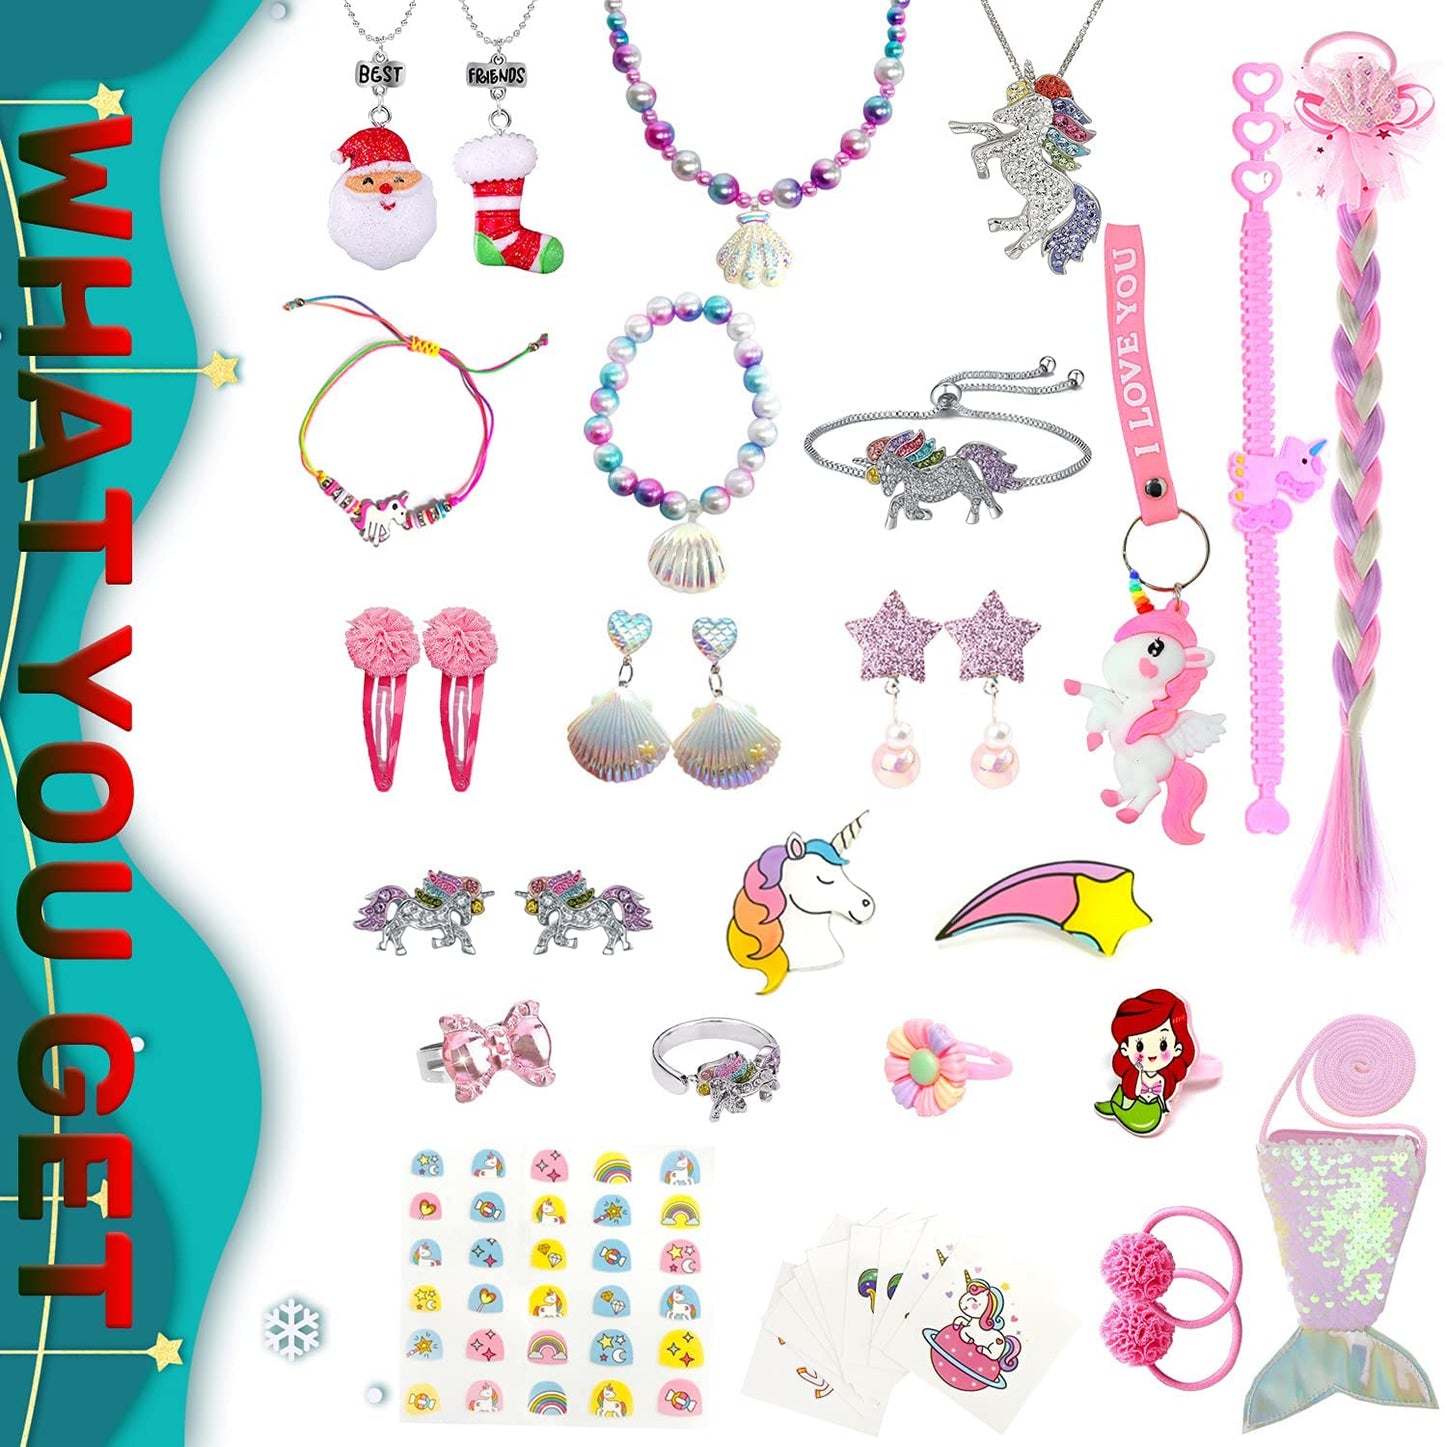 Unicorn Advent Calendar for Girl Christmas 24 Days Unicorn School Stationery and Jewelry Set - ChildAngle